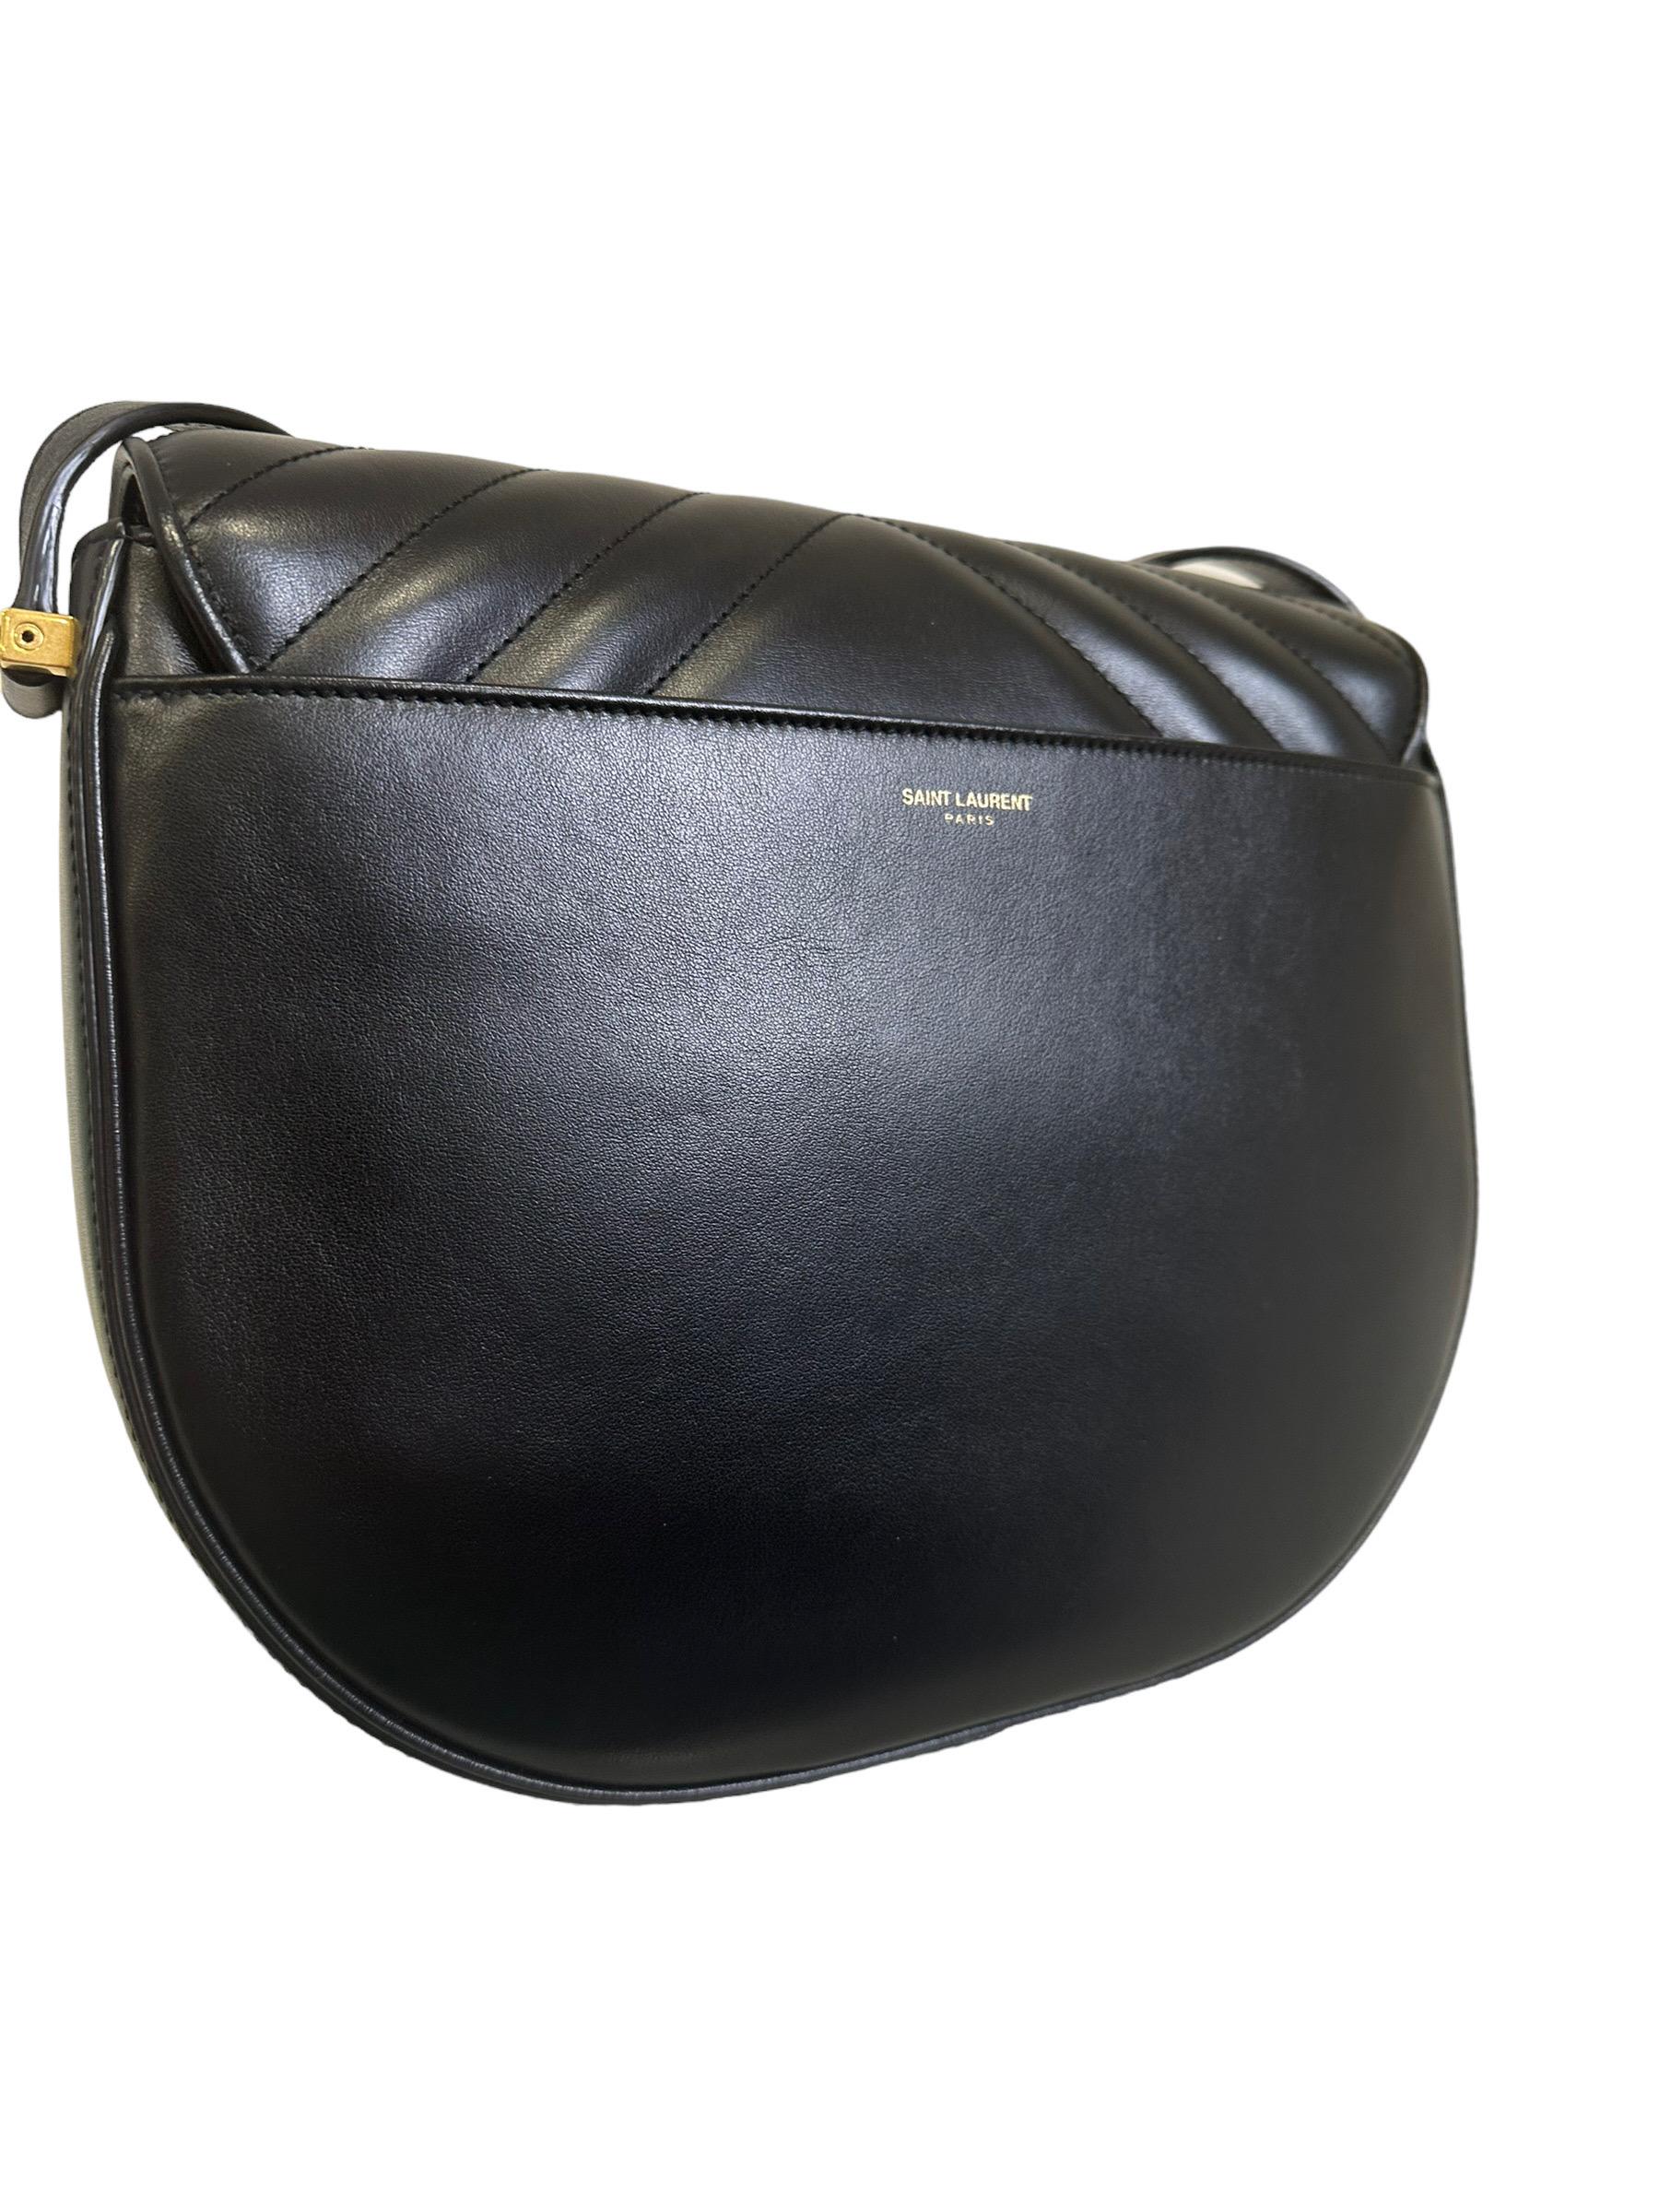 Saint Laurent Joan Black Leather Shoulder Bag In Excellent Condition In Torre Del Greco, IT